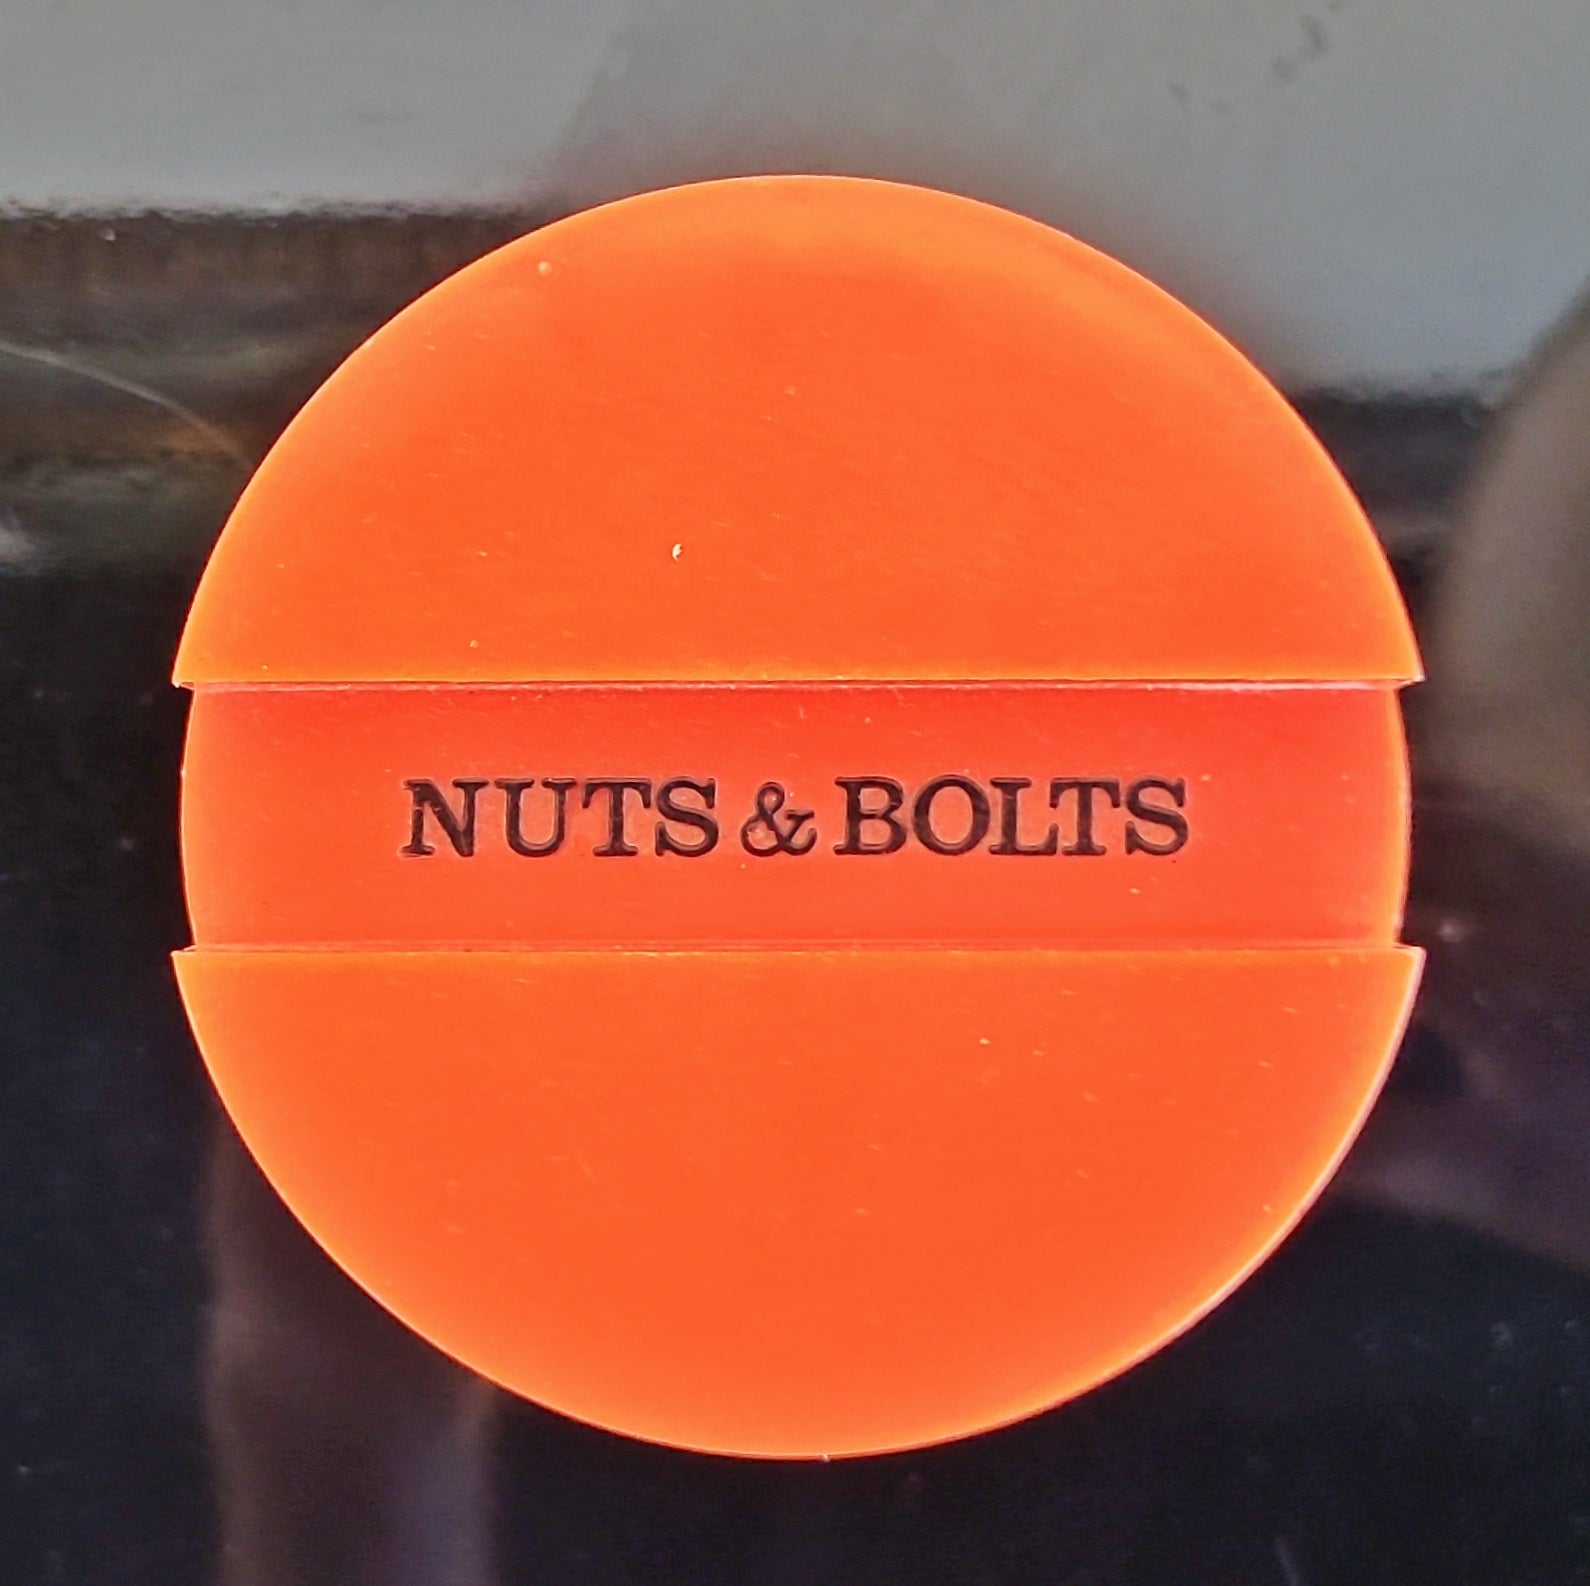 MASSIMO VIGNELLI ‘NUTS & BOLTS’ AFTERSHAVE BOTTLE FOR COLTON (1968)